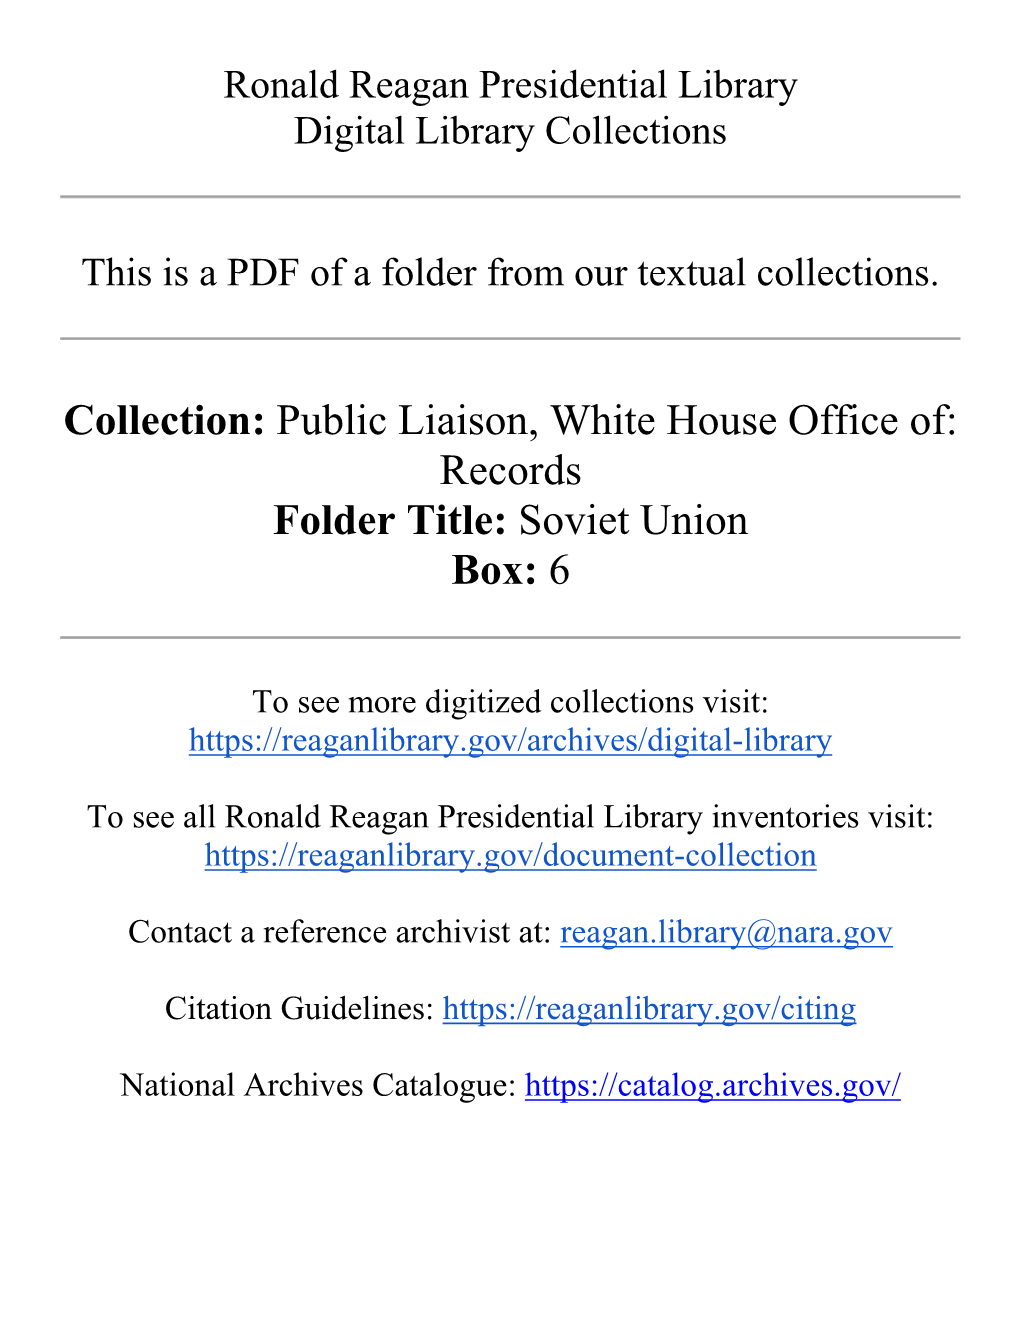 Collection: Public Liaison, White House Office Of: Records Folder Title: Soviet Union Box: 6